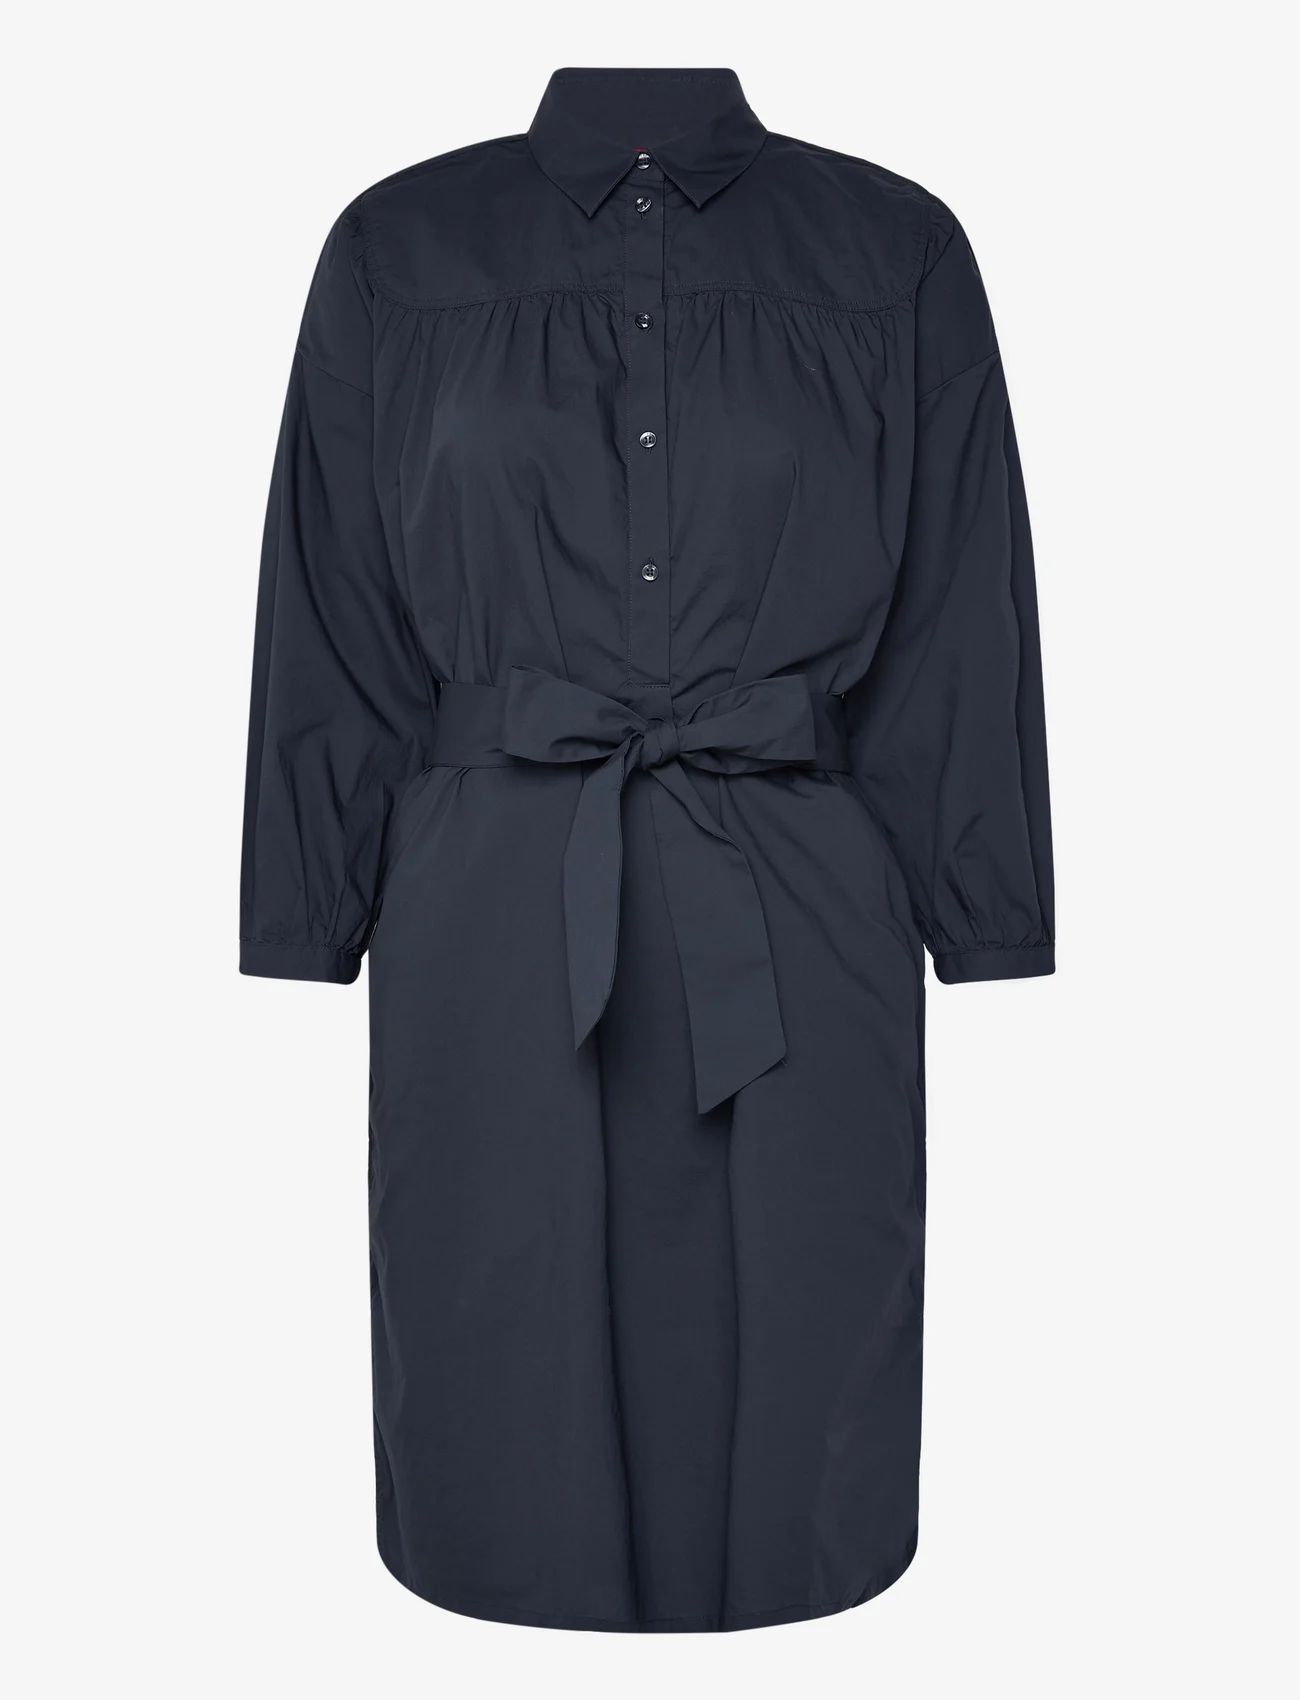 Esprit Collection - Women Dresses light woven midi - hemdkleider - petrol blue - 0